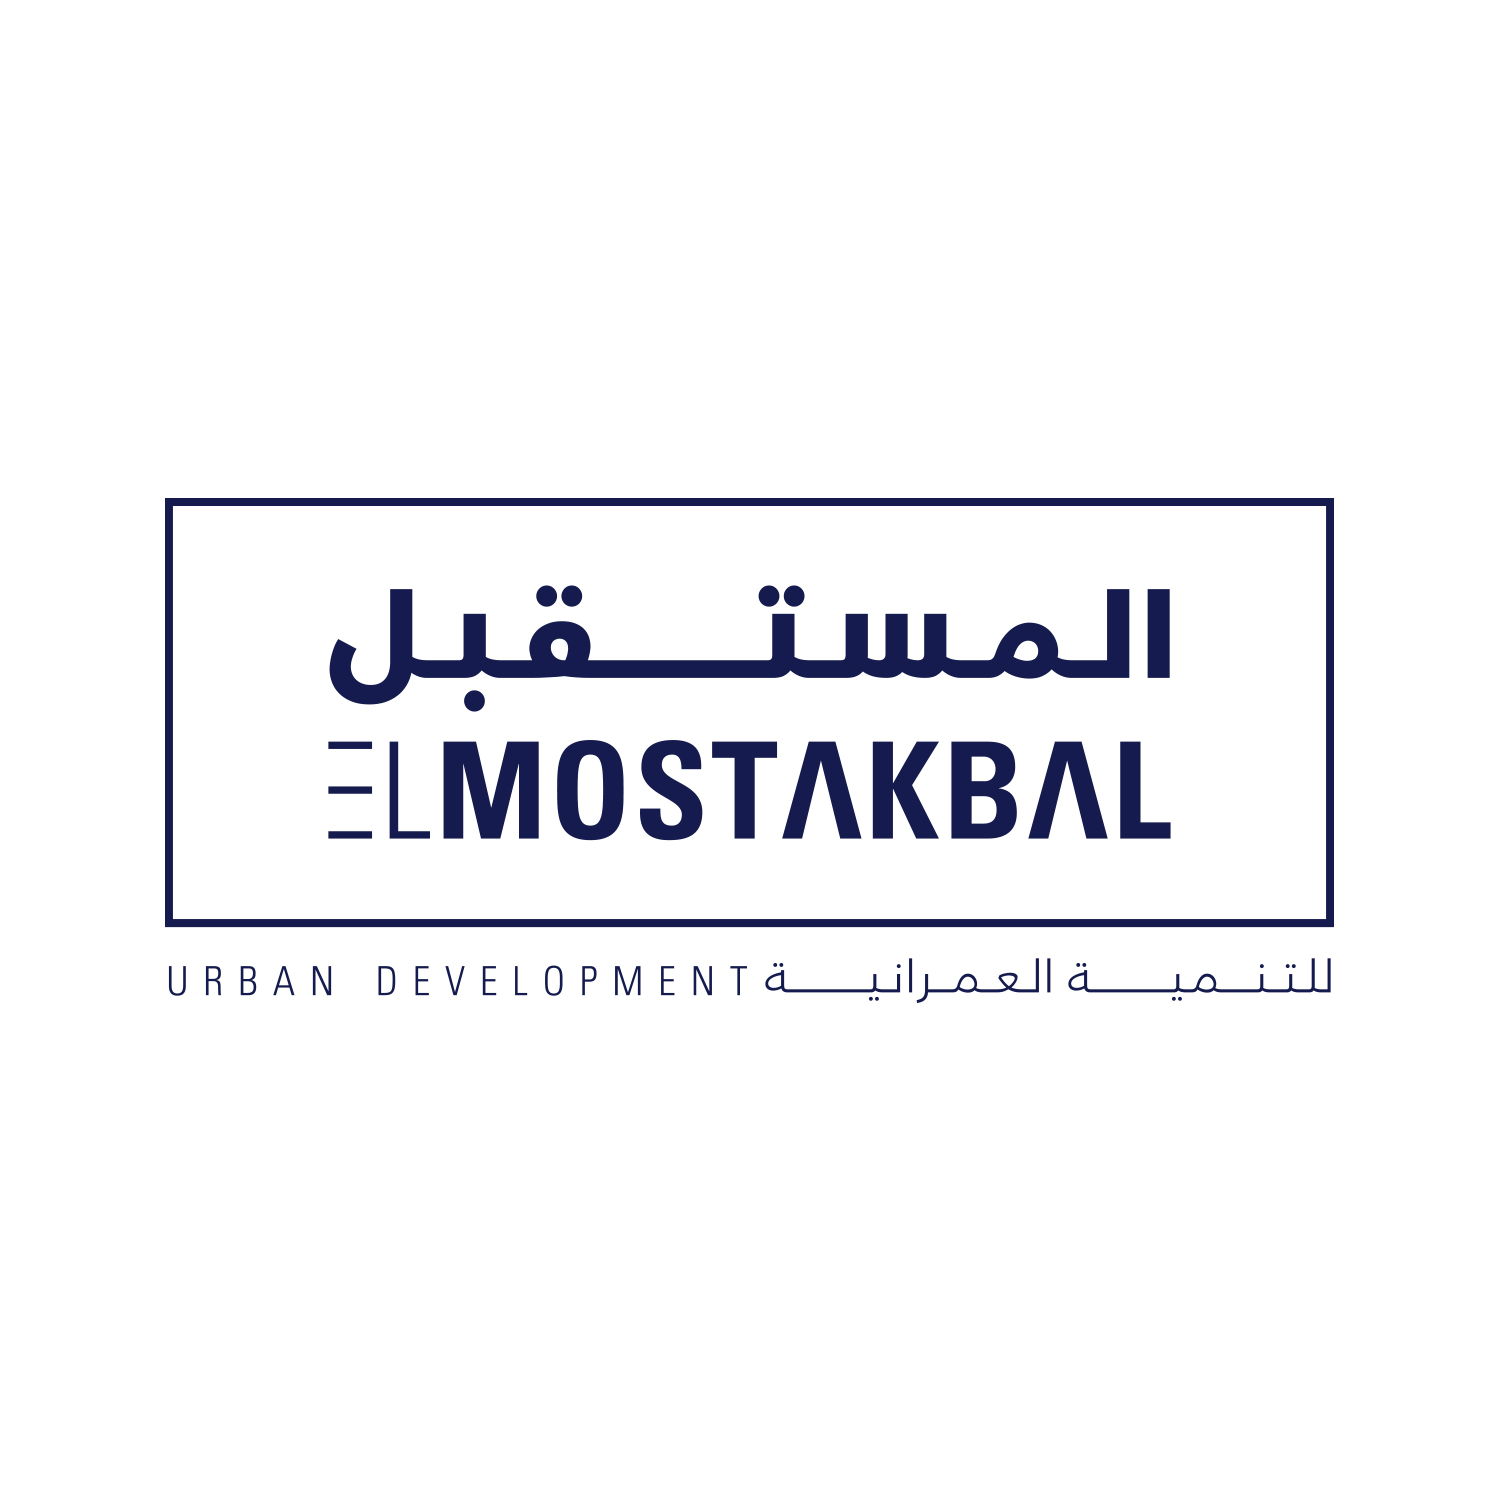 El Mostakbal Urban Development